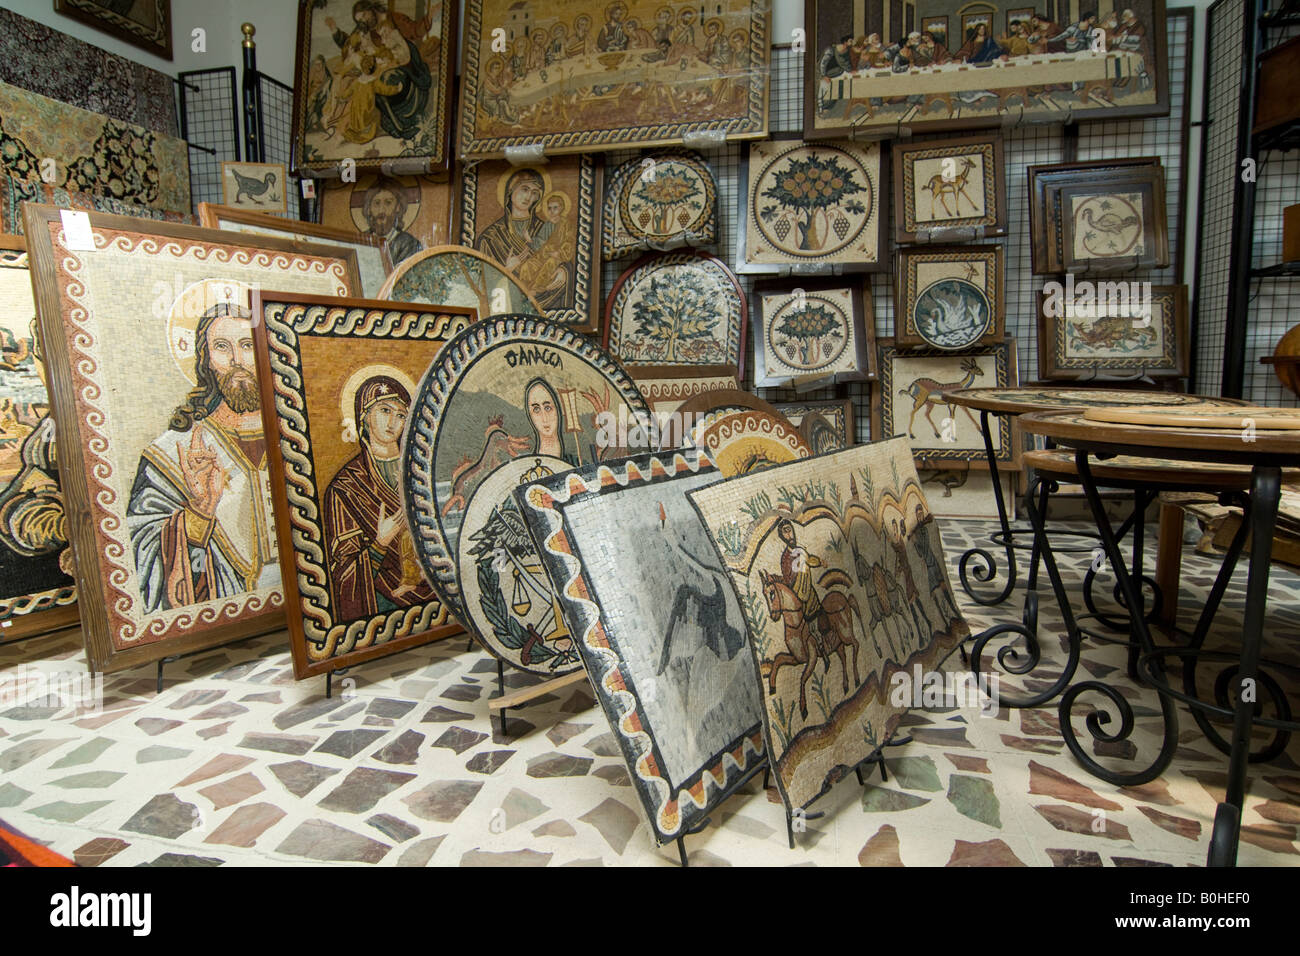 Mosaic paintings in a souvenir shop, Jordan, Middle East Stock Photo